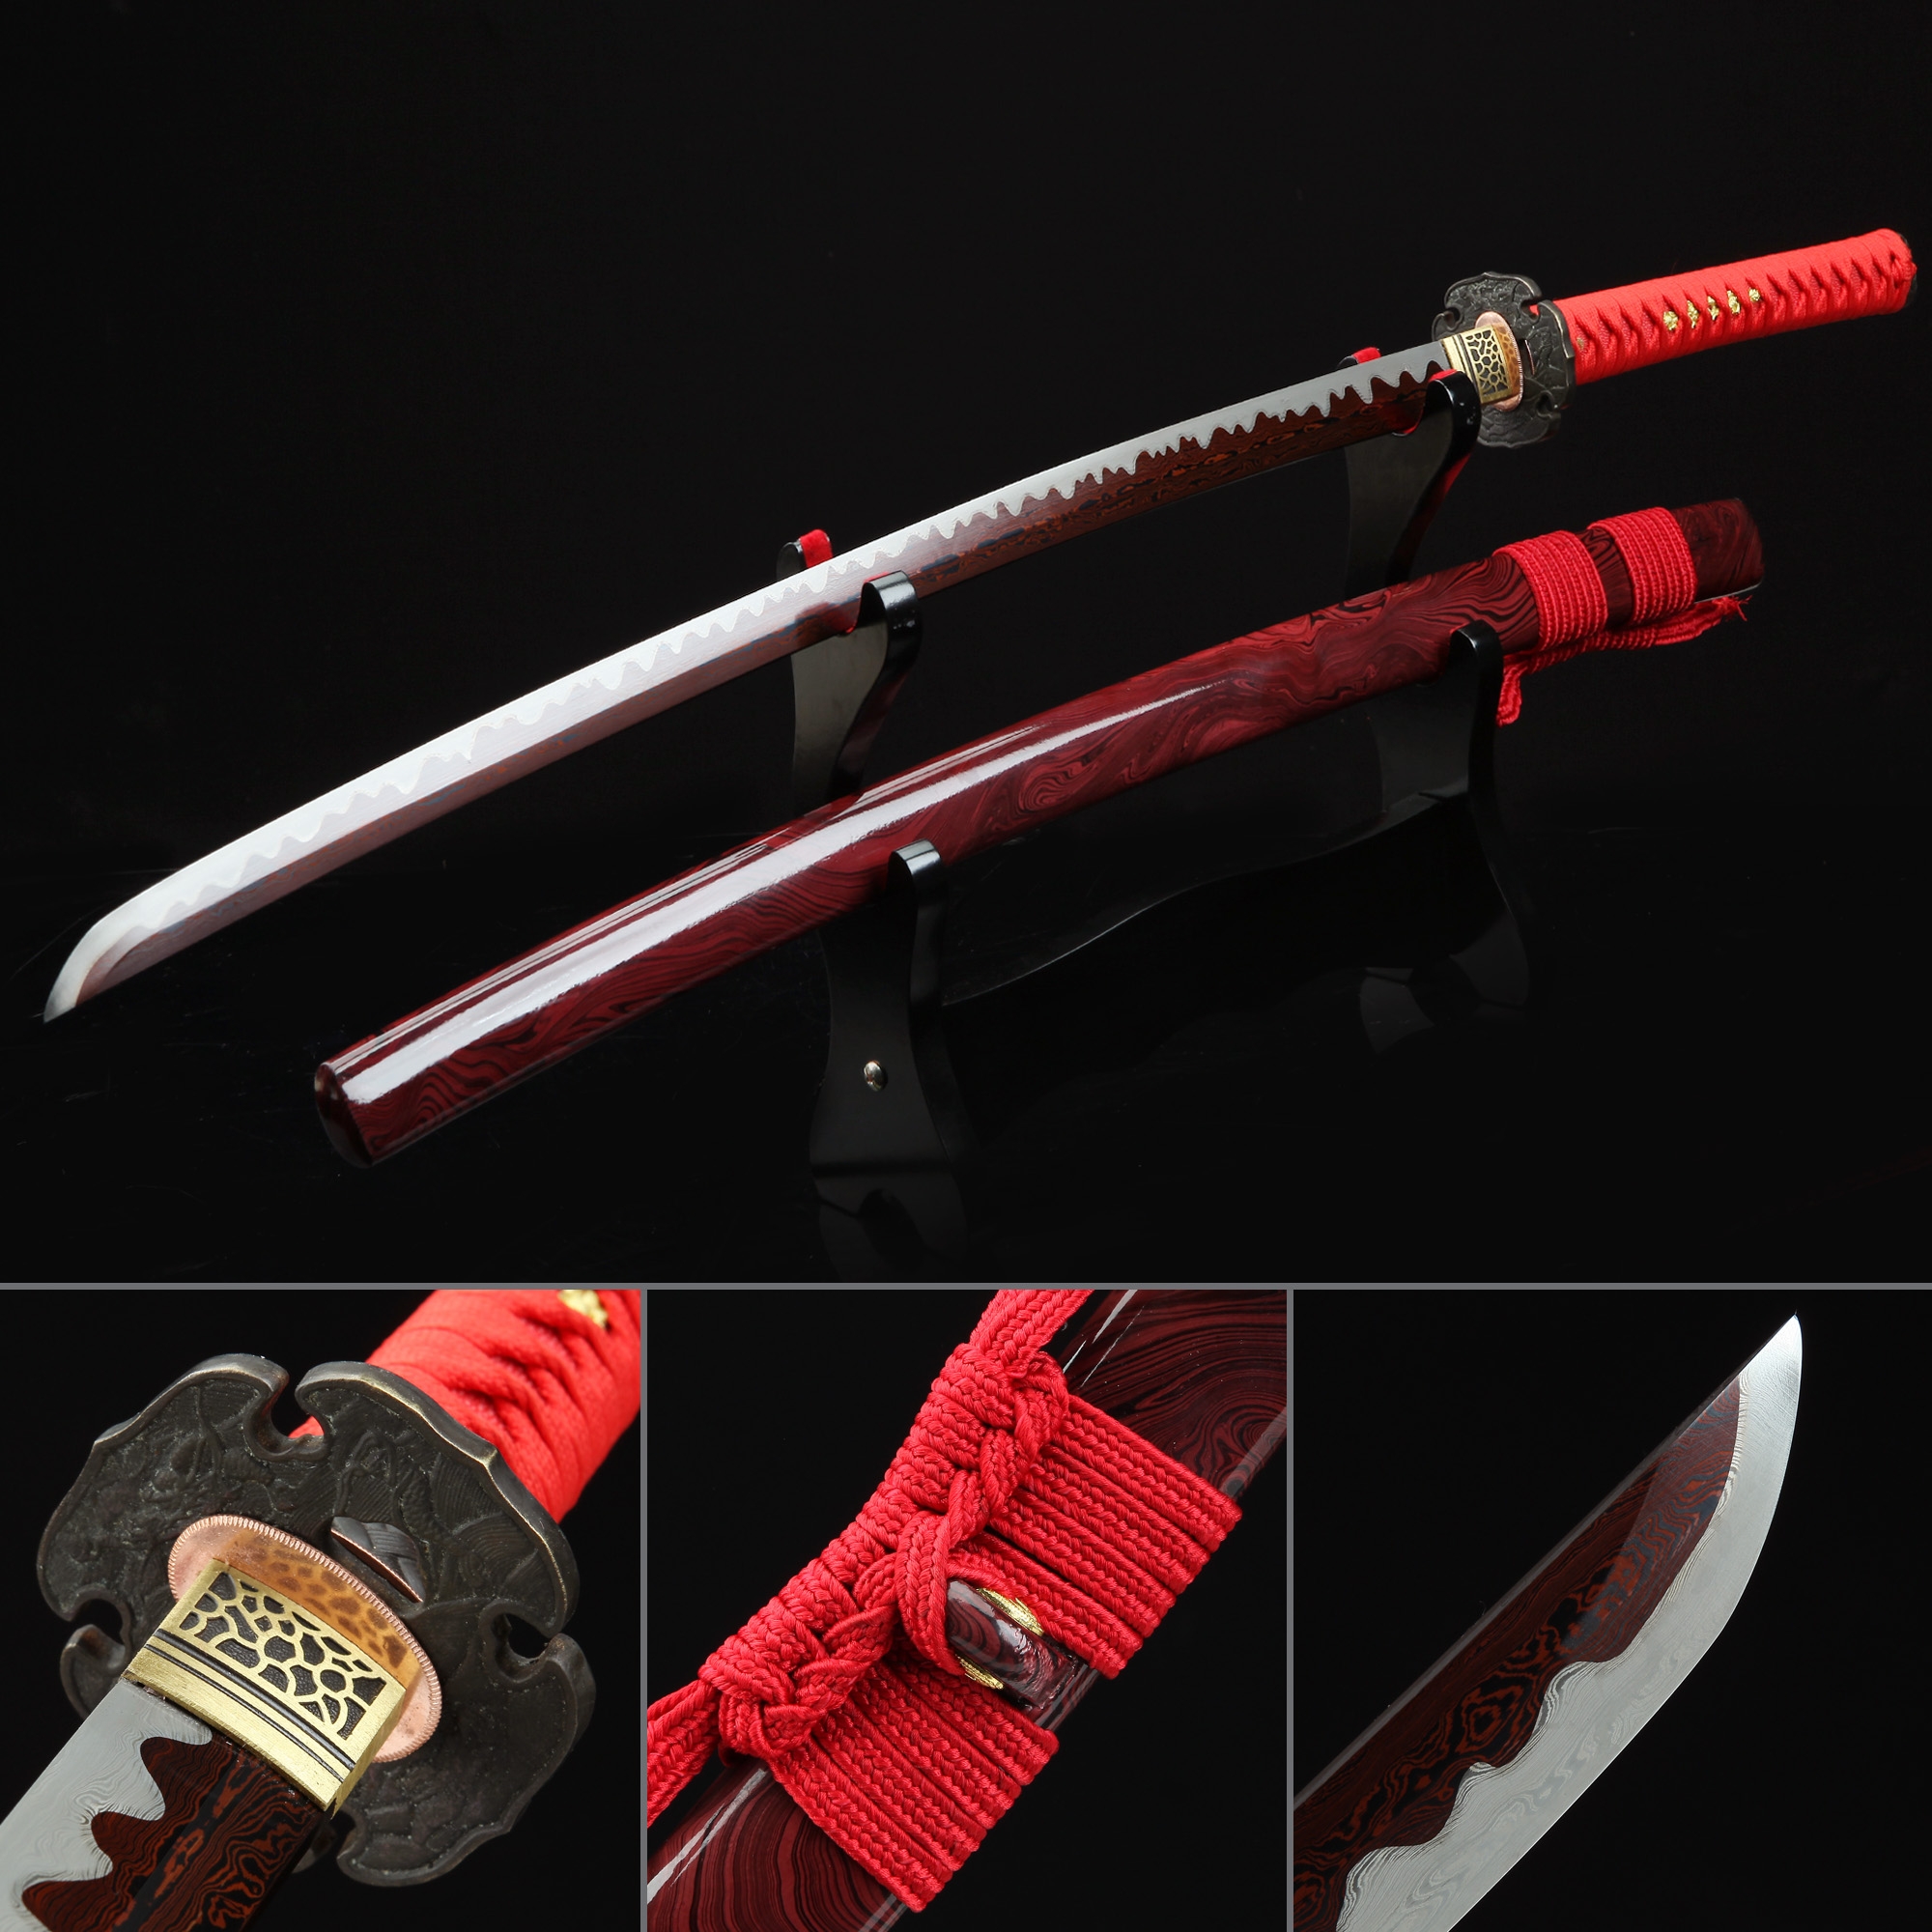 do you have to janpanses to buy real katana sword